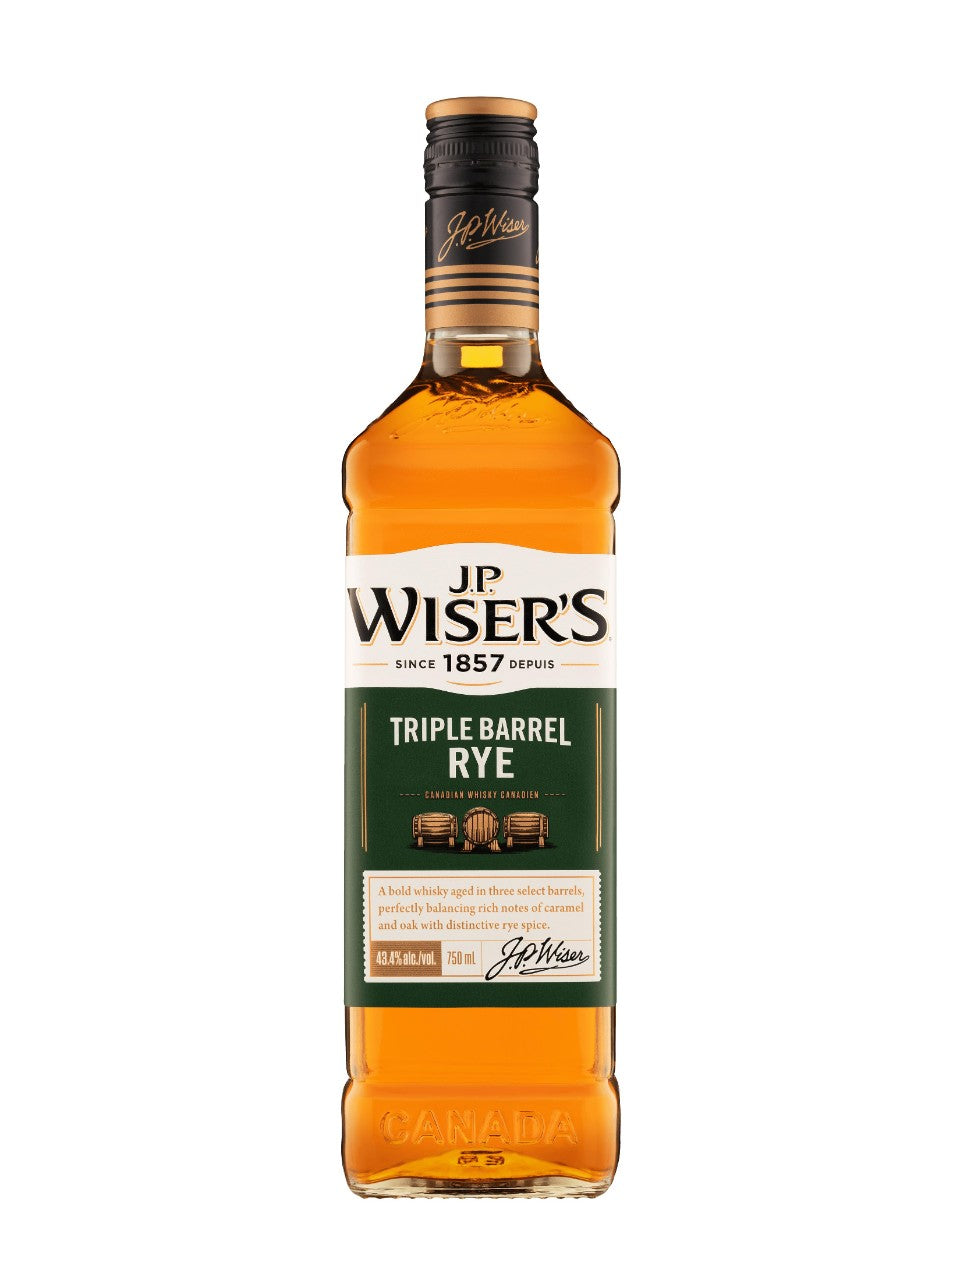 J.P. Wiser's Triple Barrel Rye Whisky 750 mL bottle